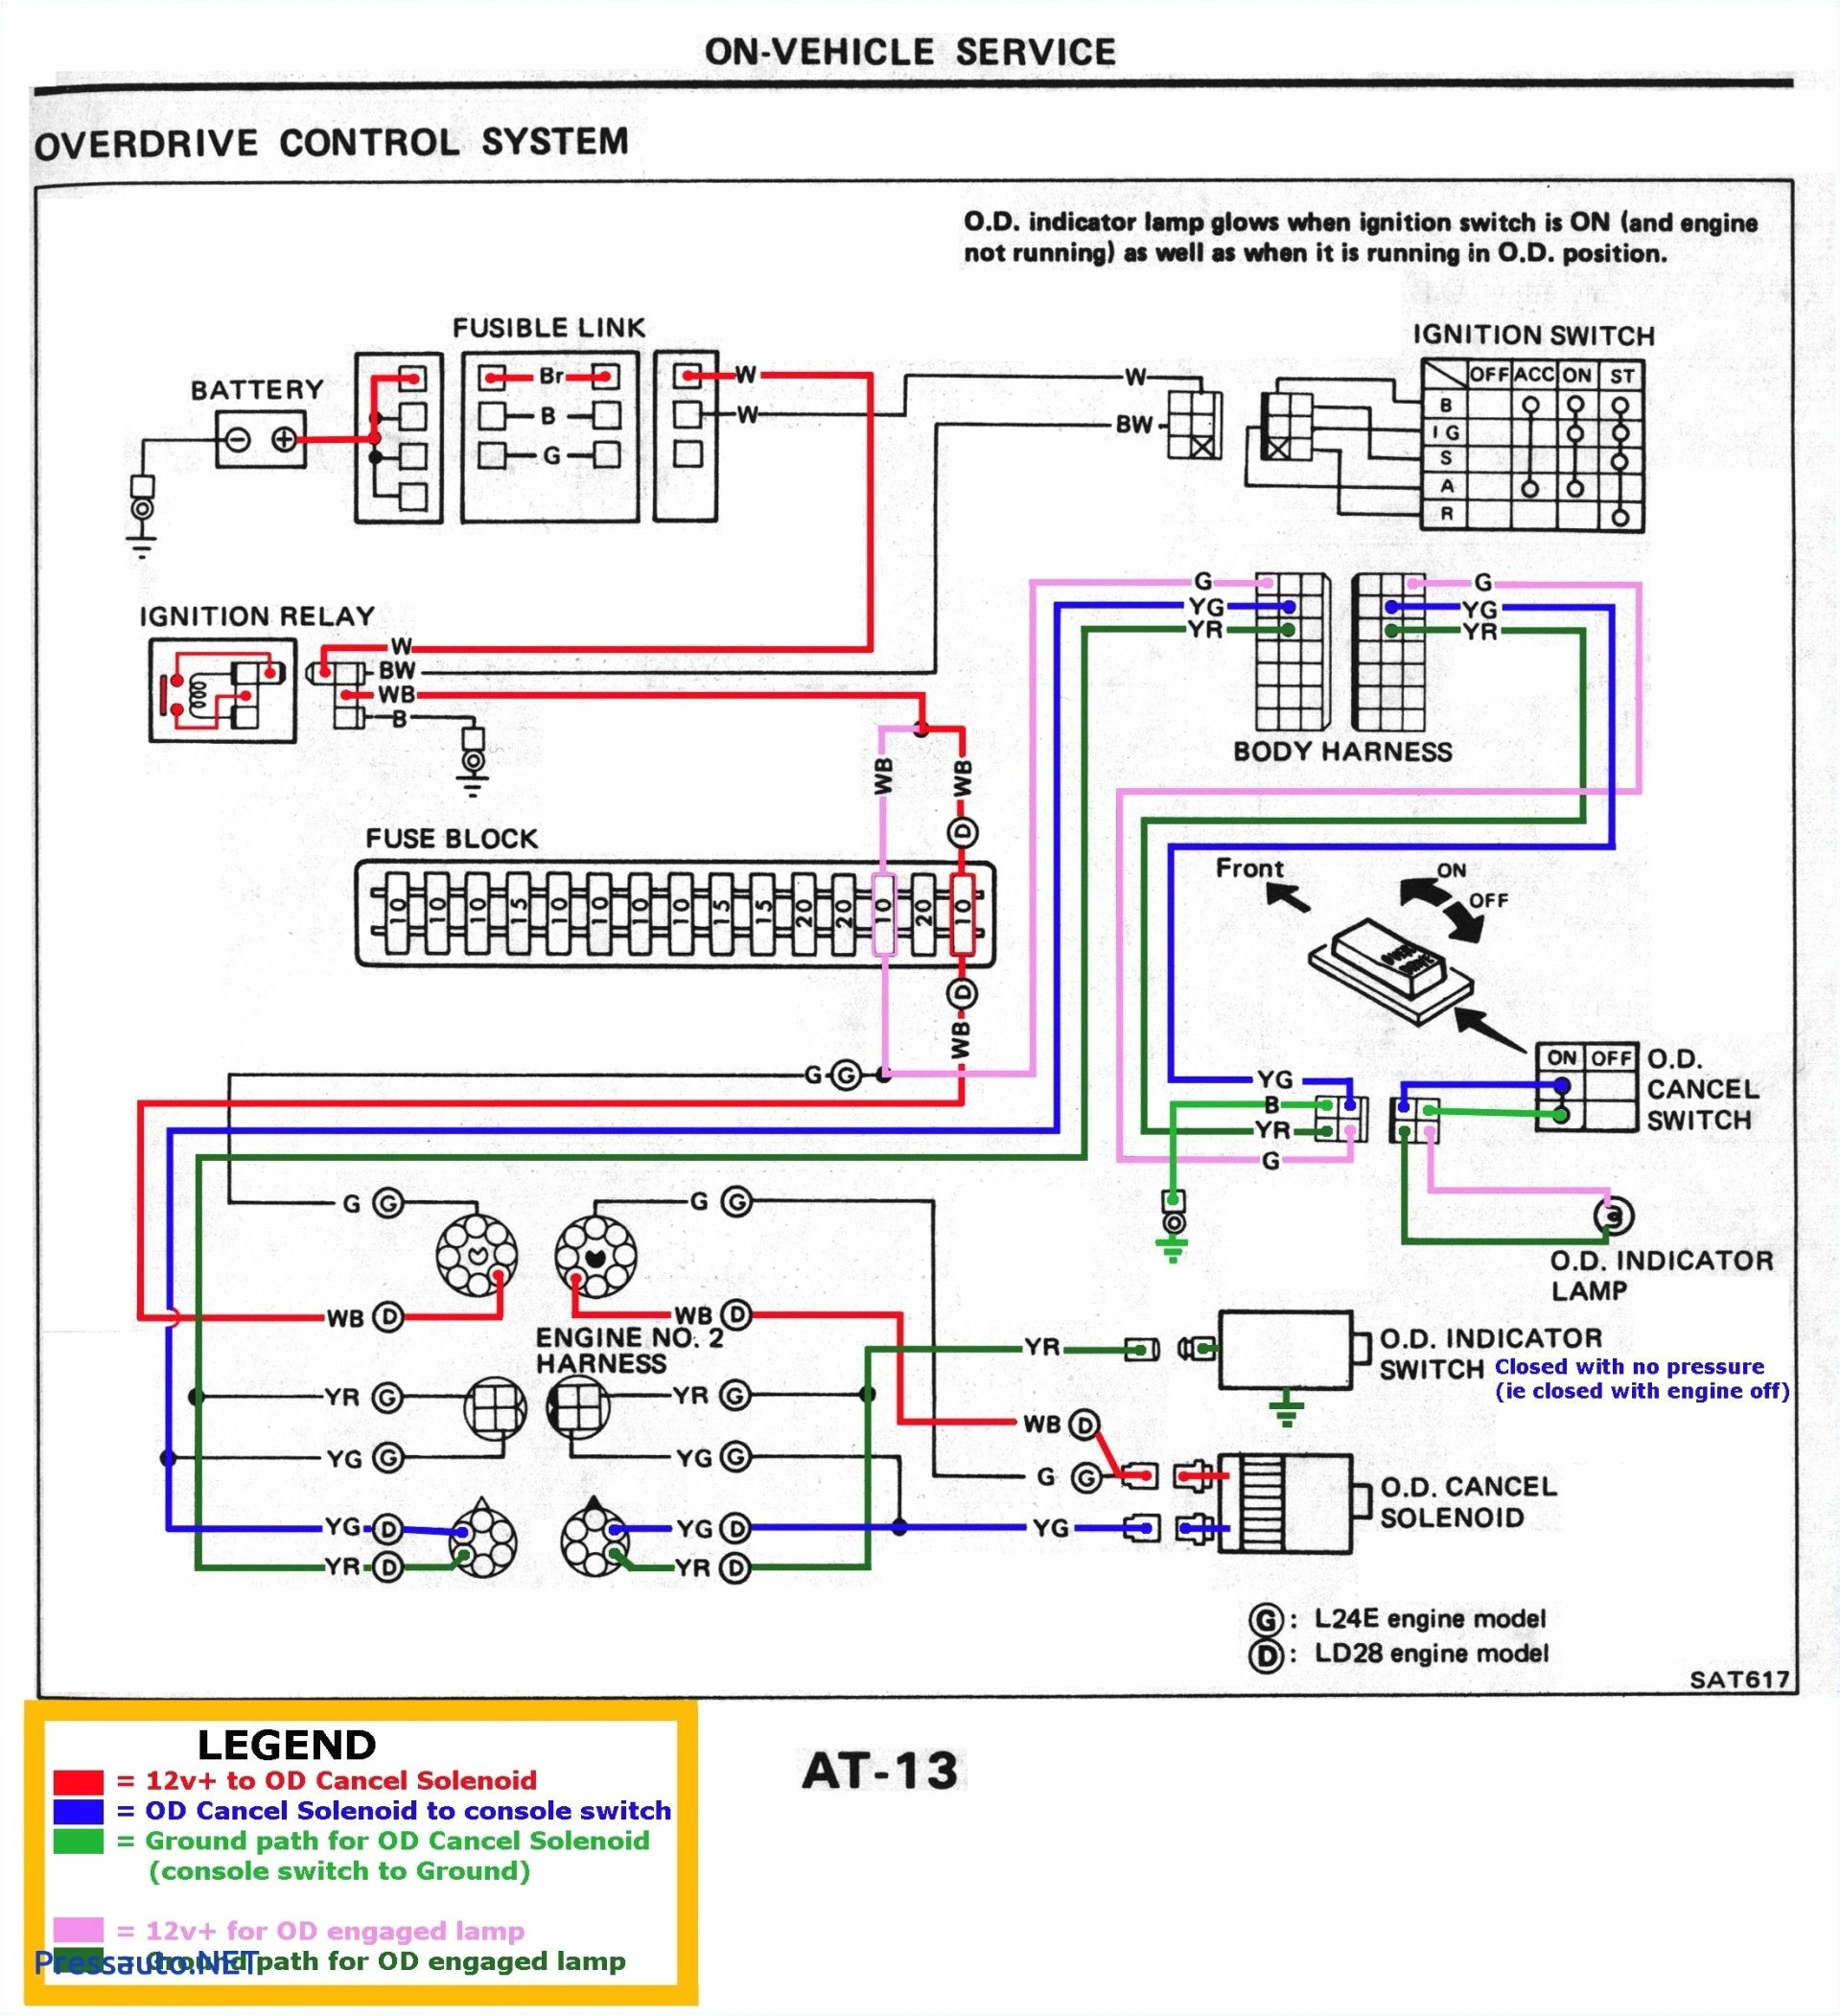 omron 61f g ap wiring diagram awesome wiring relay omron free download wiring diagrams wiring